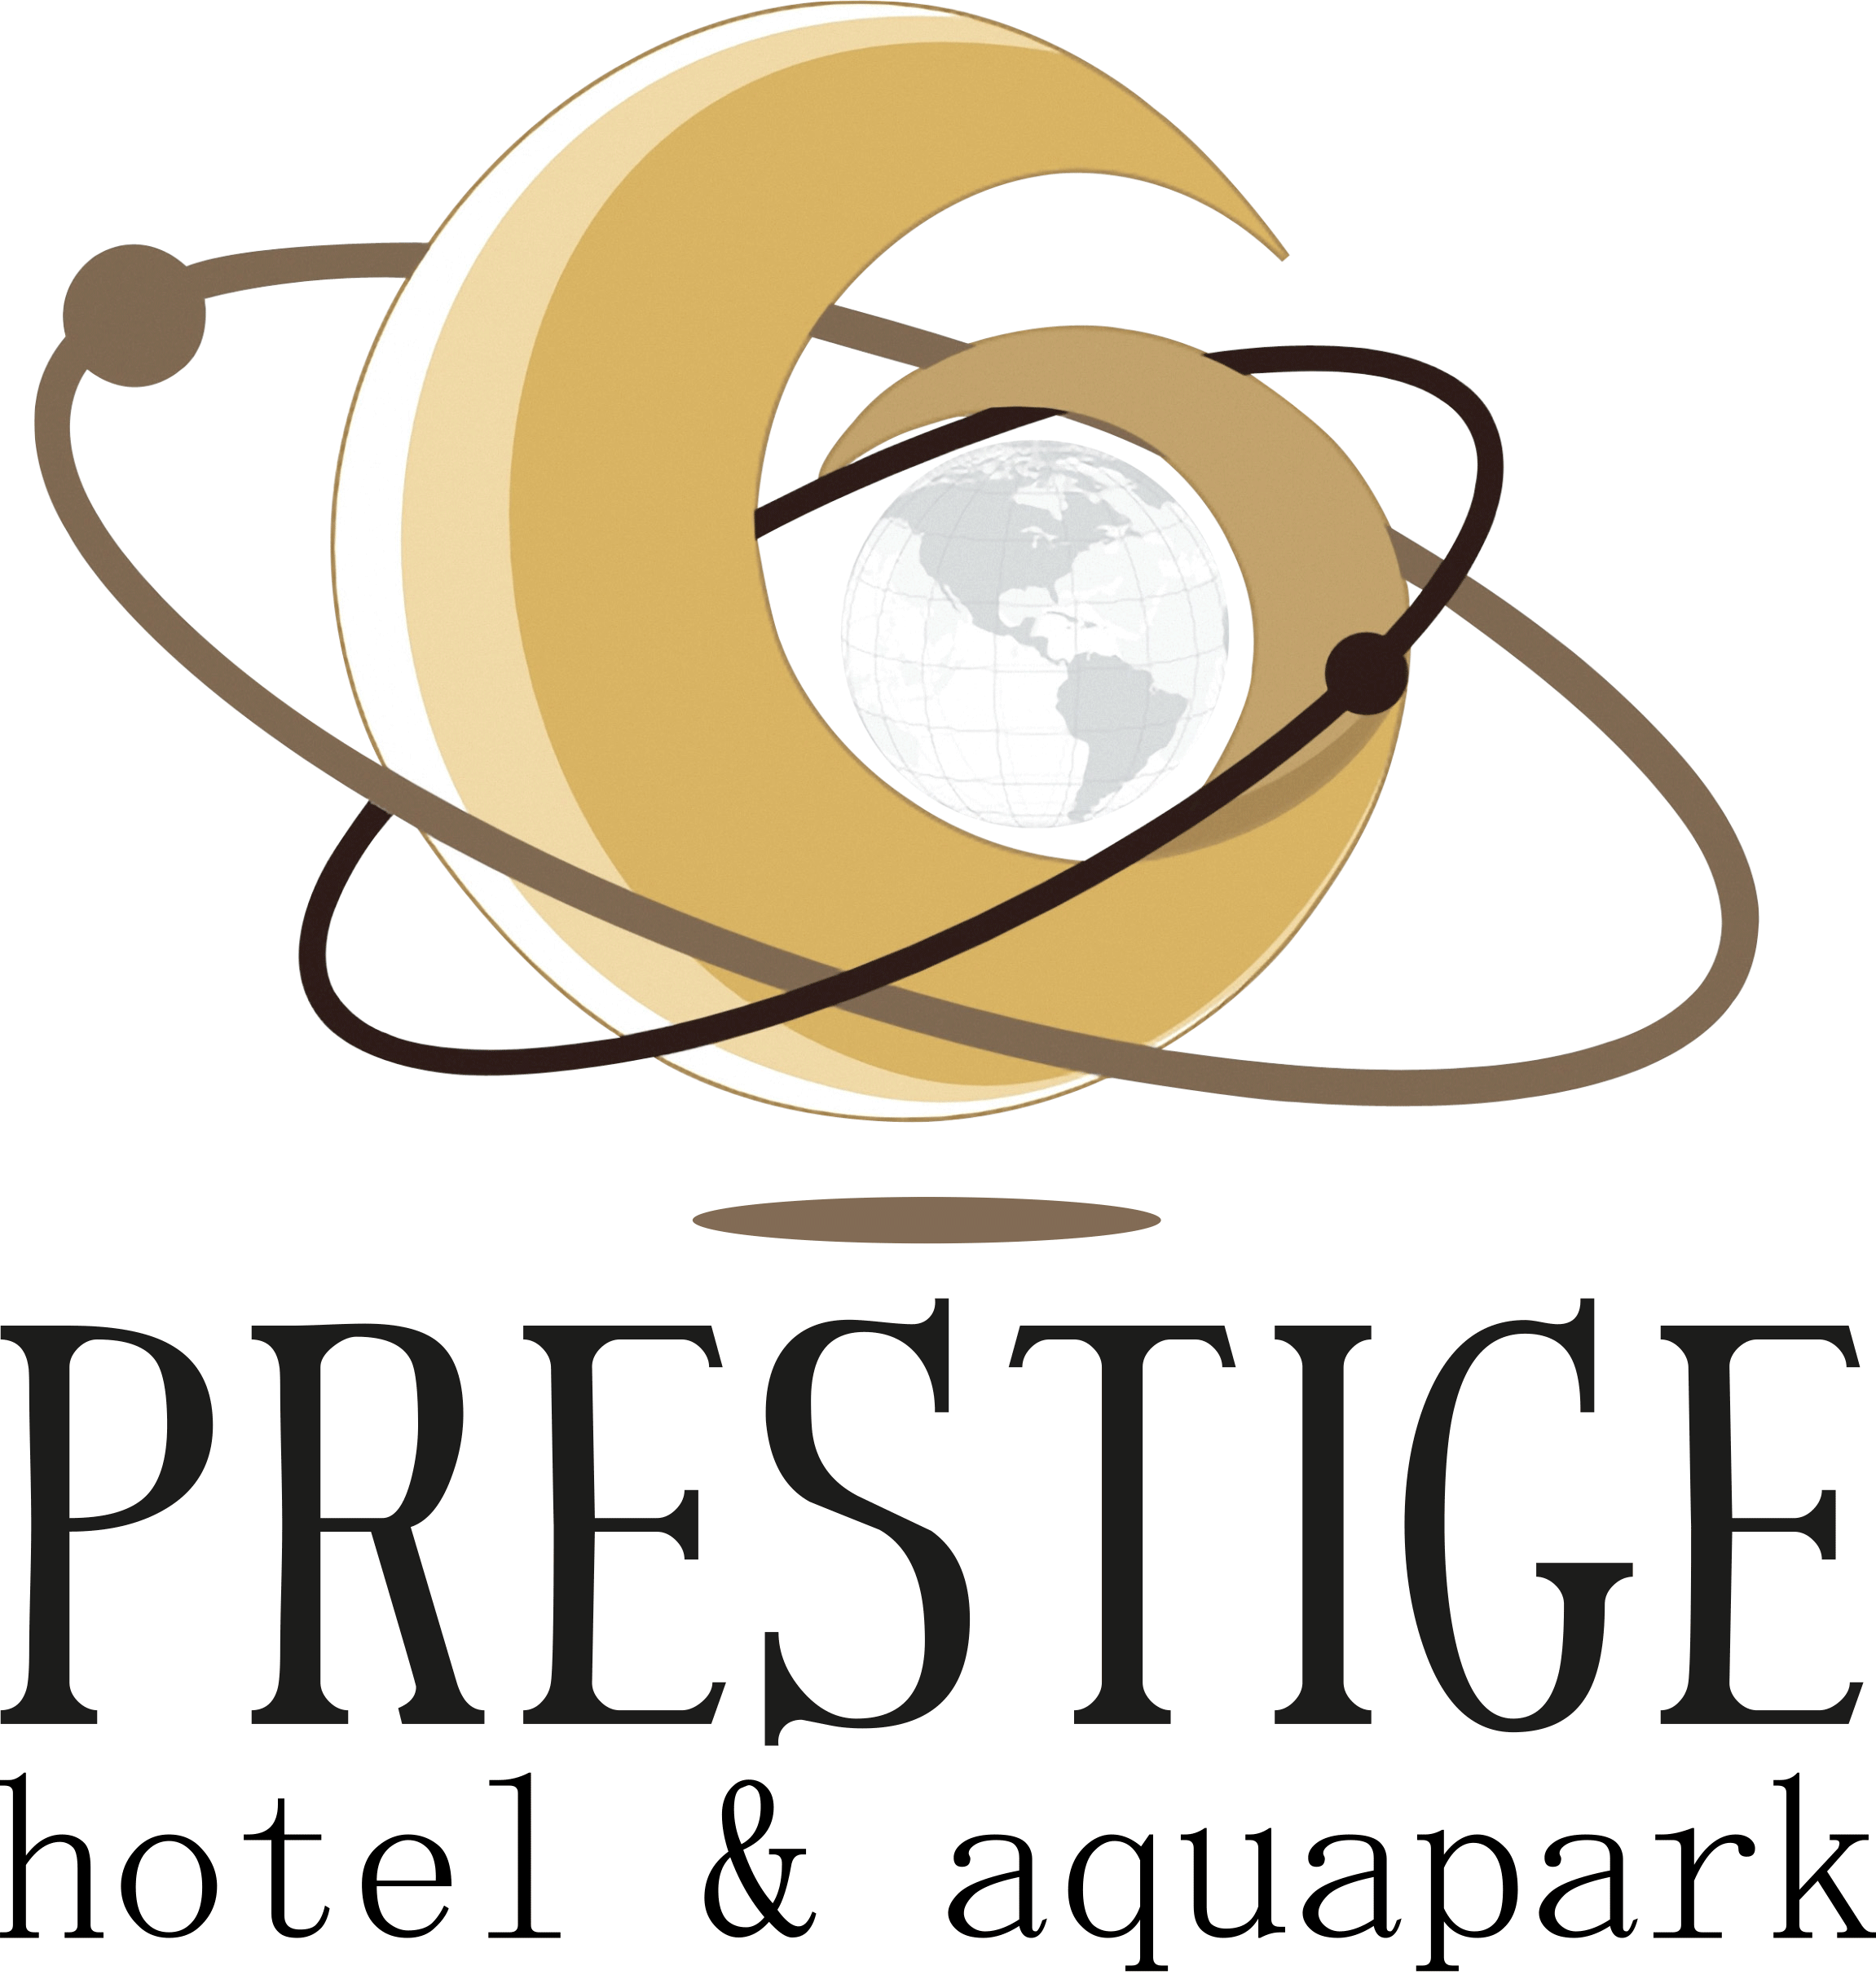 Prestige travelers club